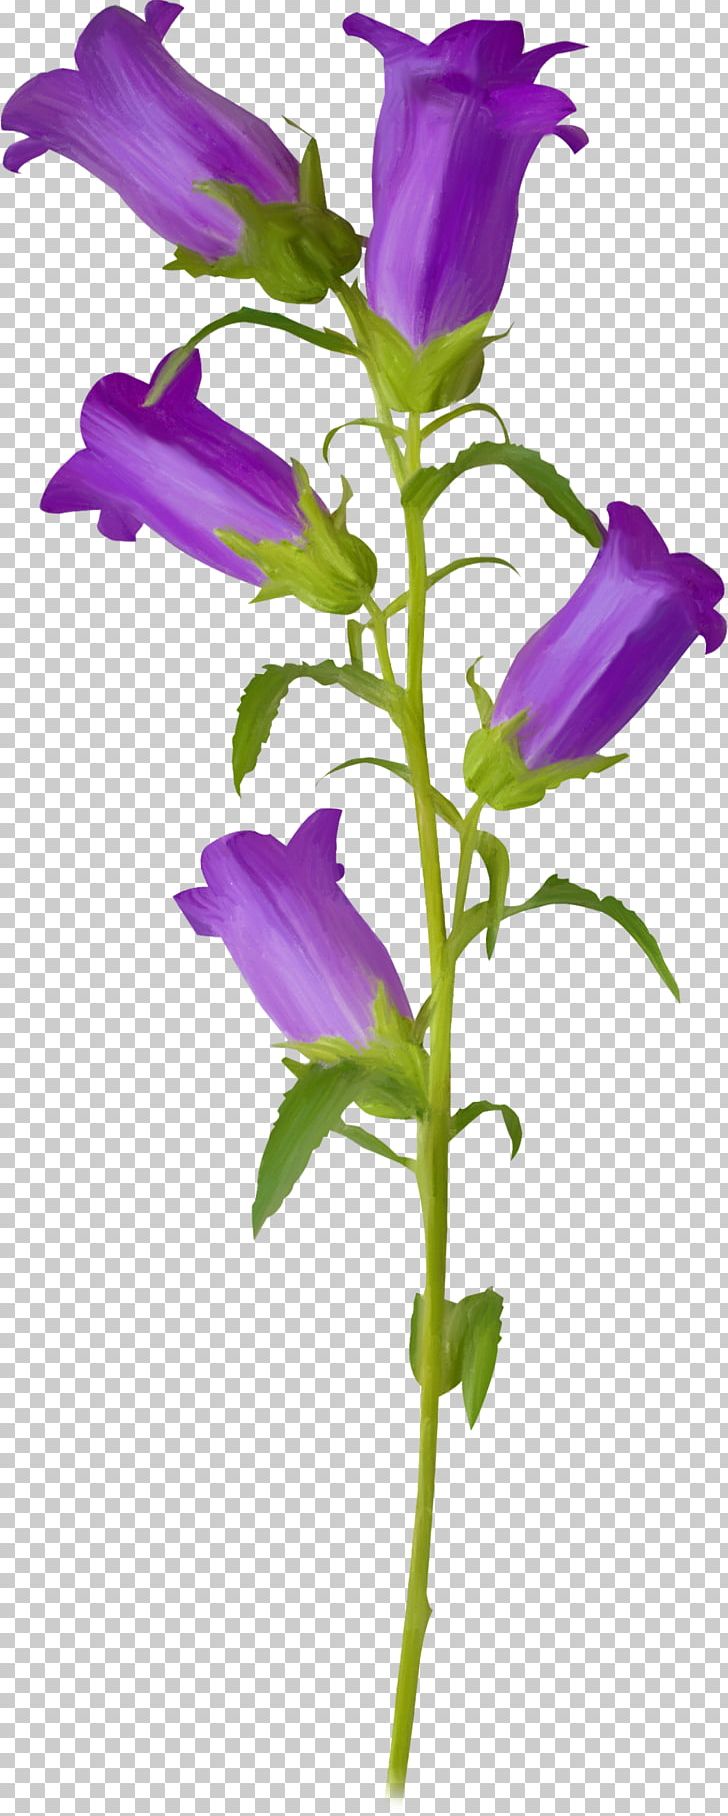 Flower Violet Campanula Patula PNG, Clipart, Bellflower, Bellflower Family, Bellflowers, Cut Flowers, Drawing Free PNG Download